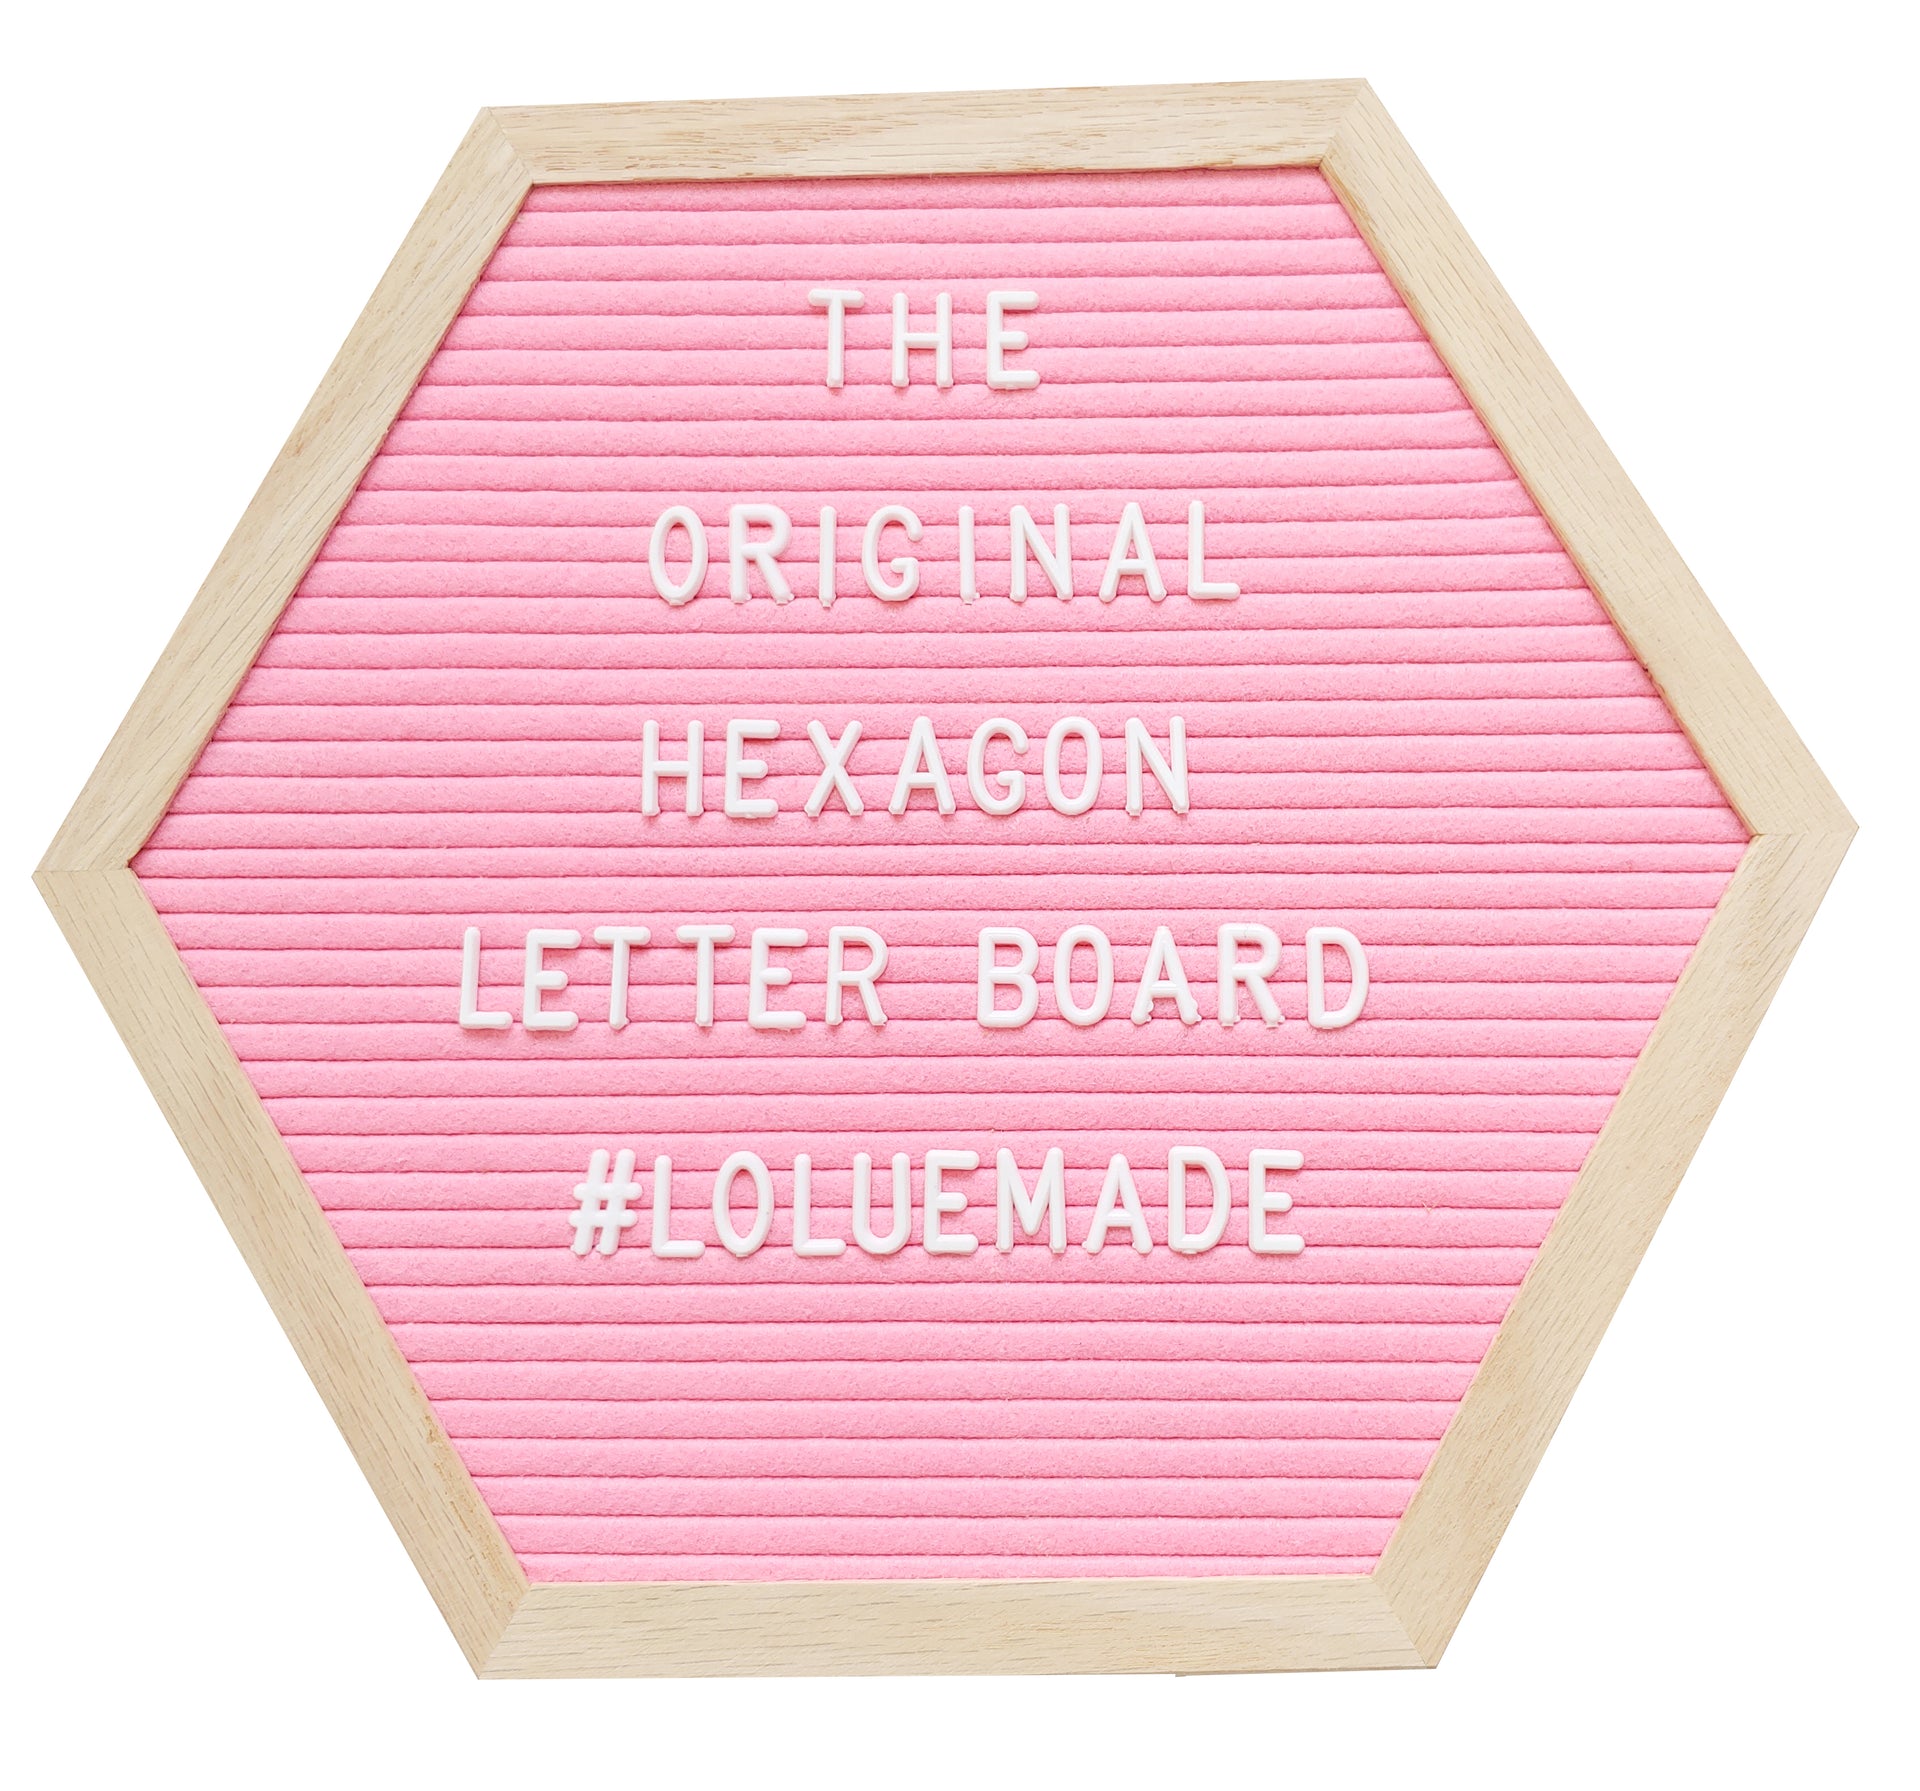 PlayBoard®: The Original Hexagon Letter Board (Gray) - The LoLueMade Company®